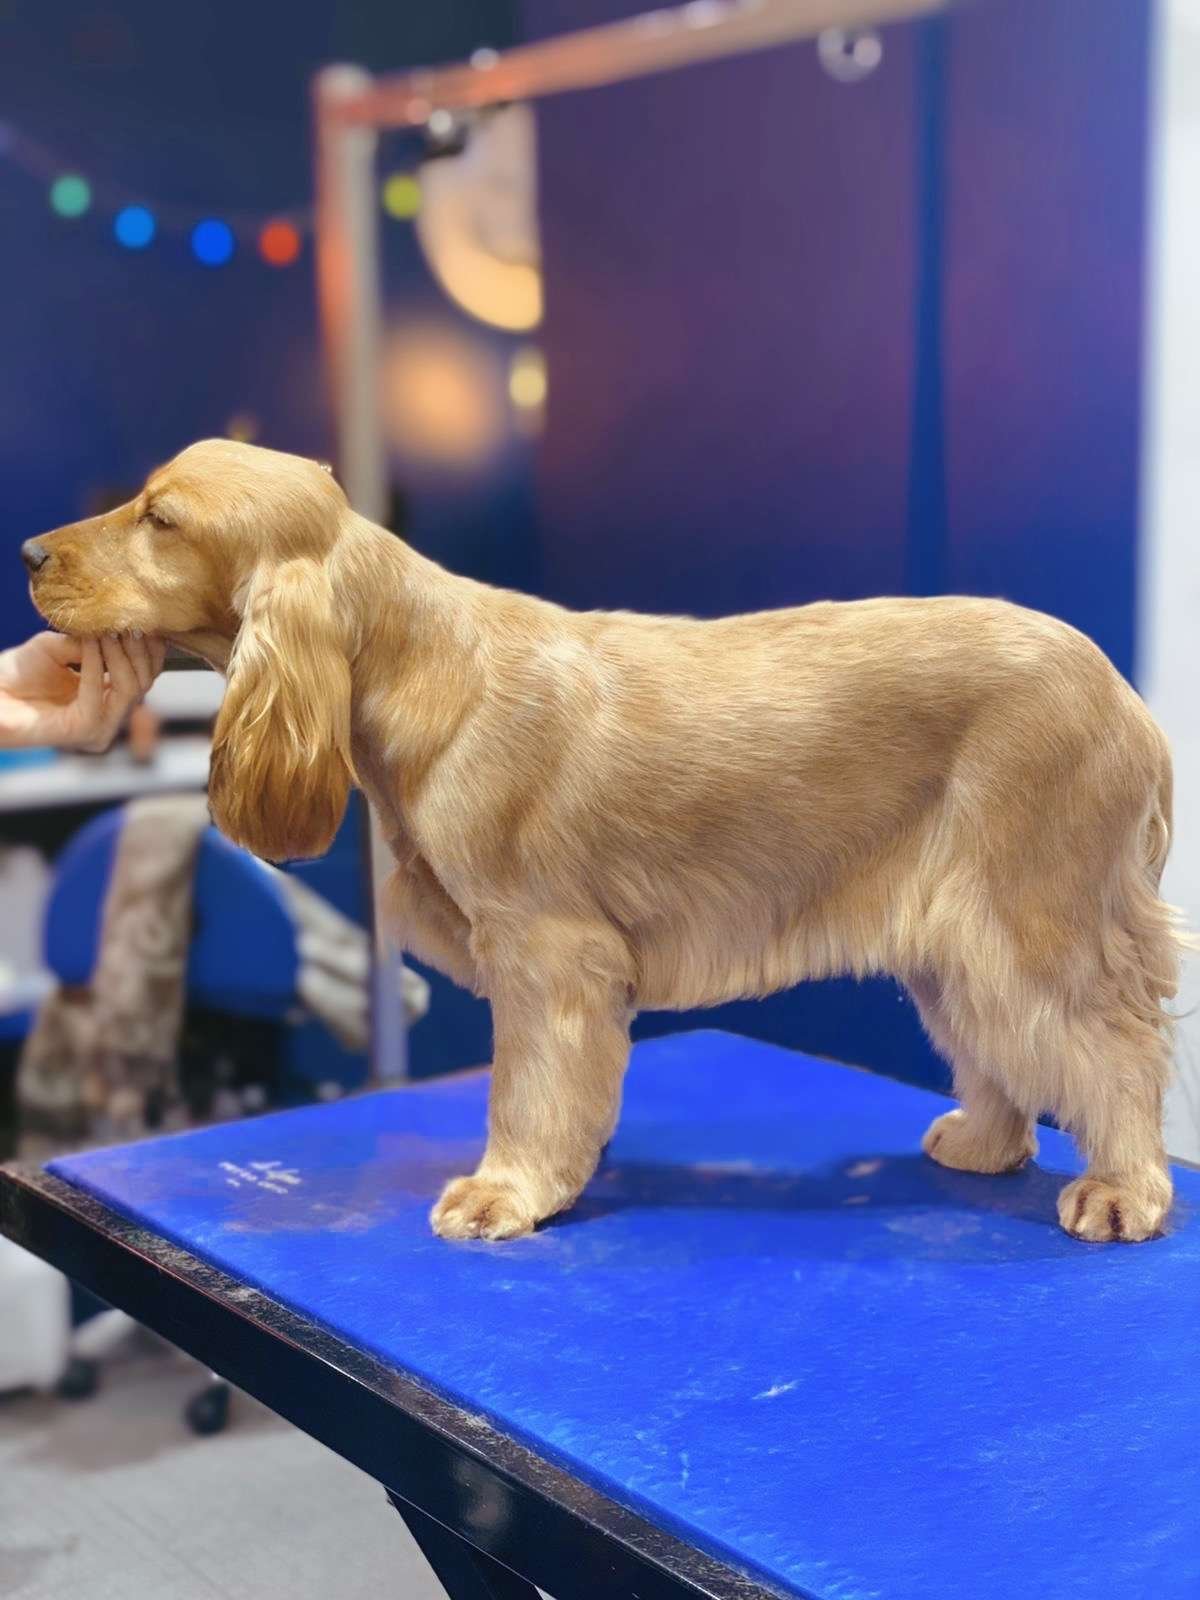 dog grooming salon in Paris, toilettage paris 6eme, dog grooming, dog care